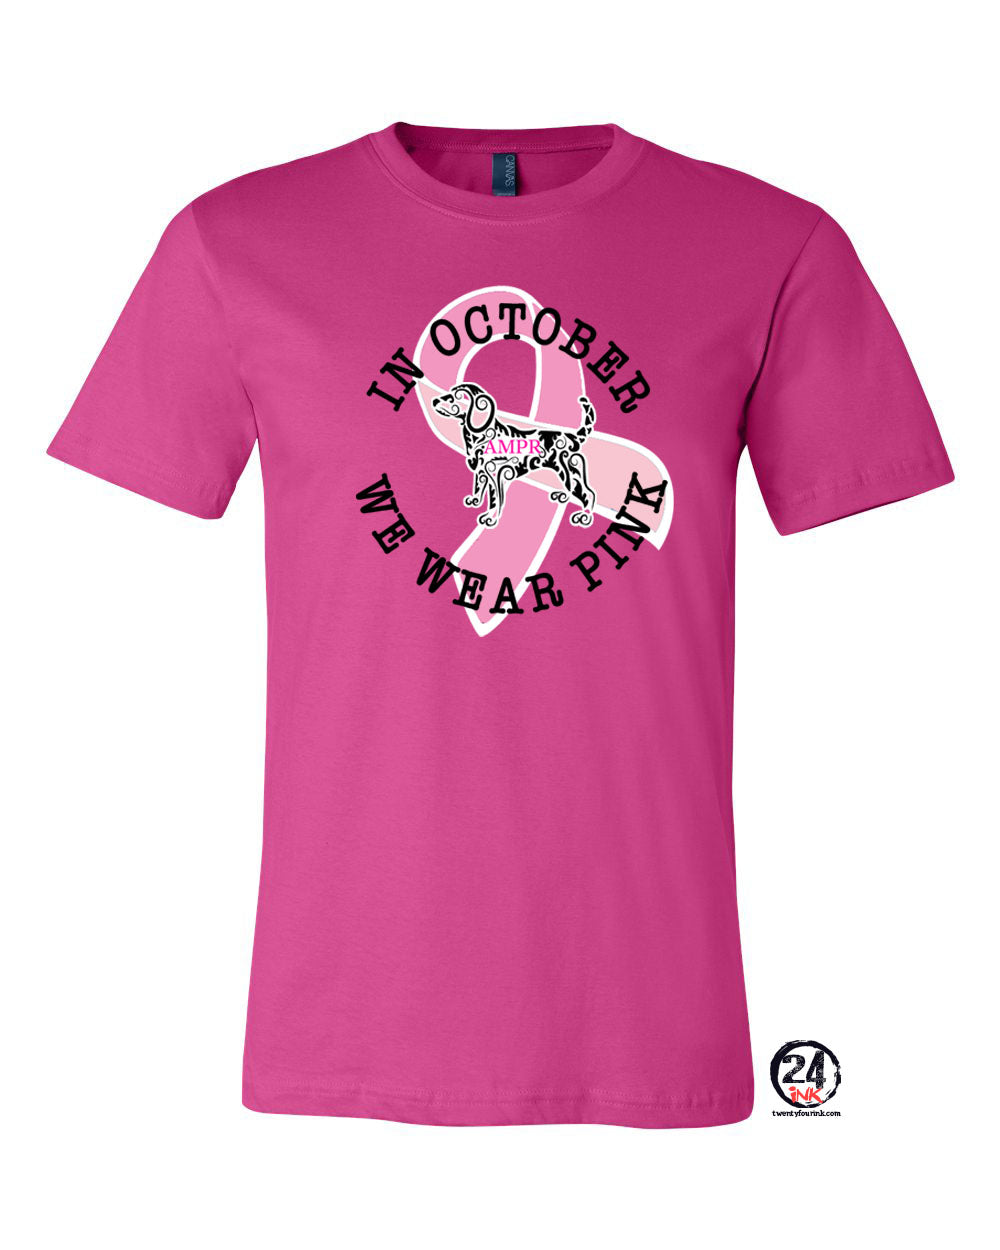 Ampr in Oct we wear Pink T-Shirt